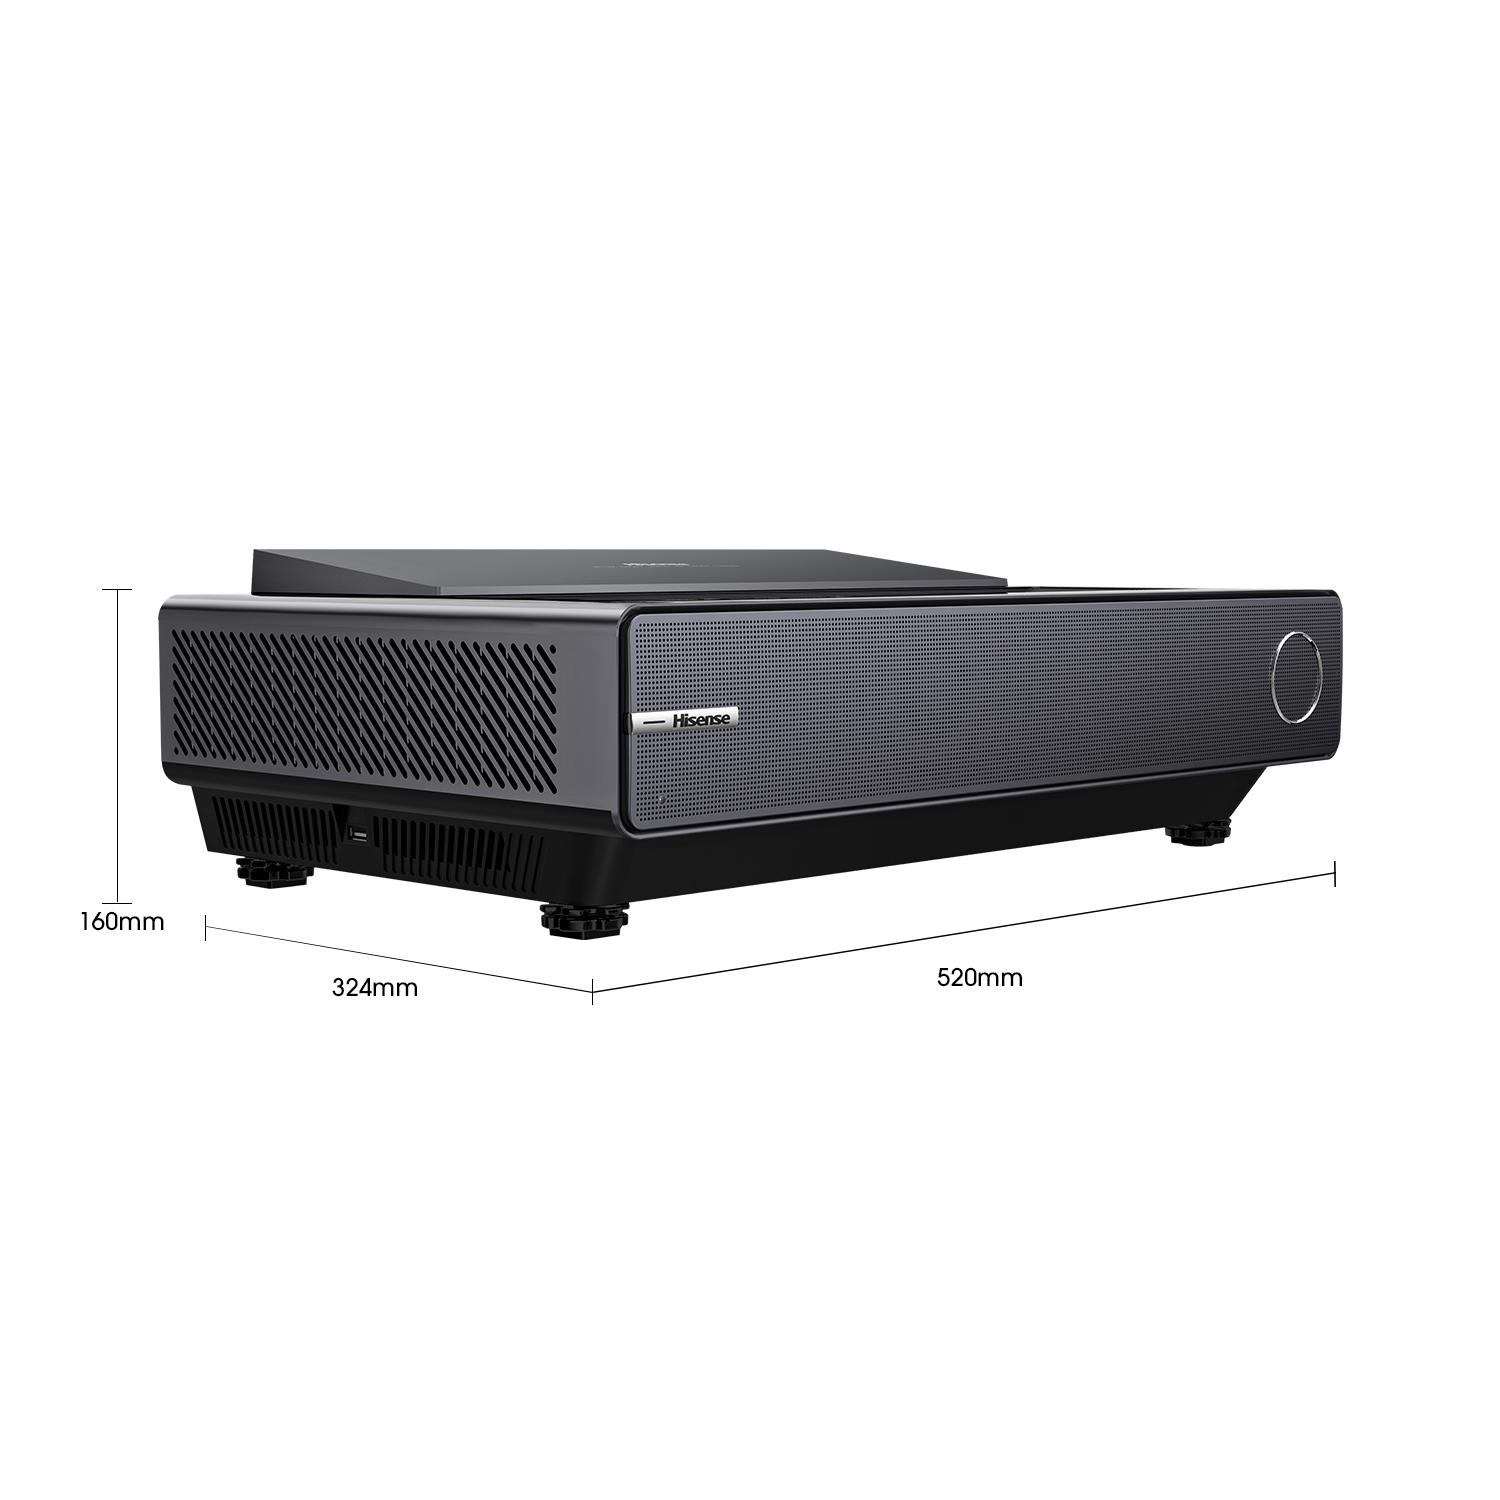 4K, Pro 2200 WLAN) Lumen, Laser TV HISENSE Konsole (UHD PX1